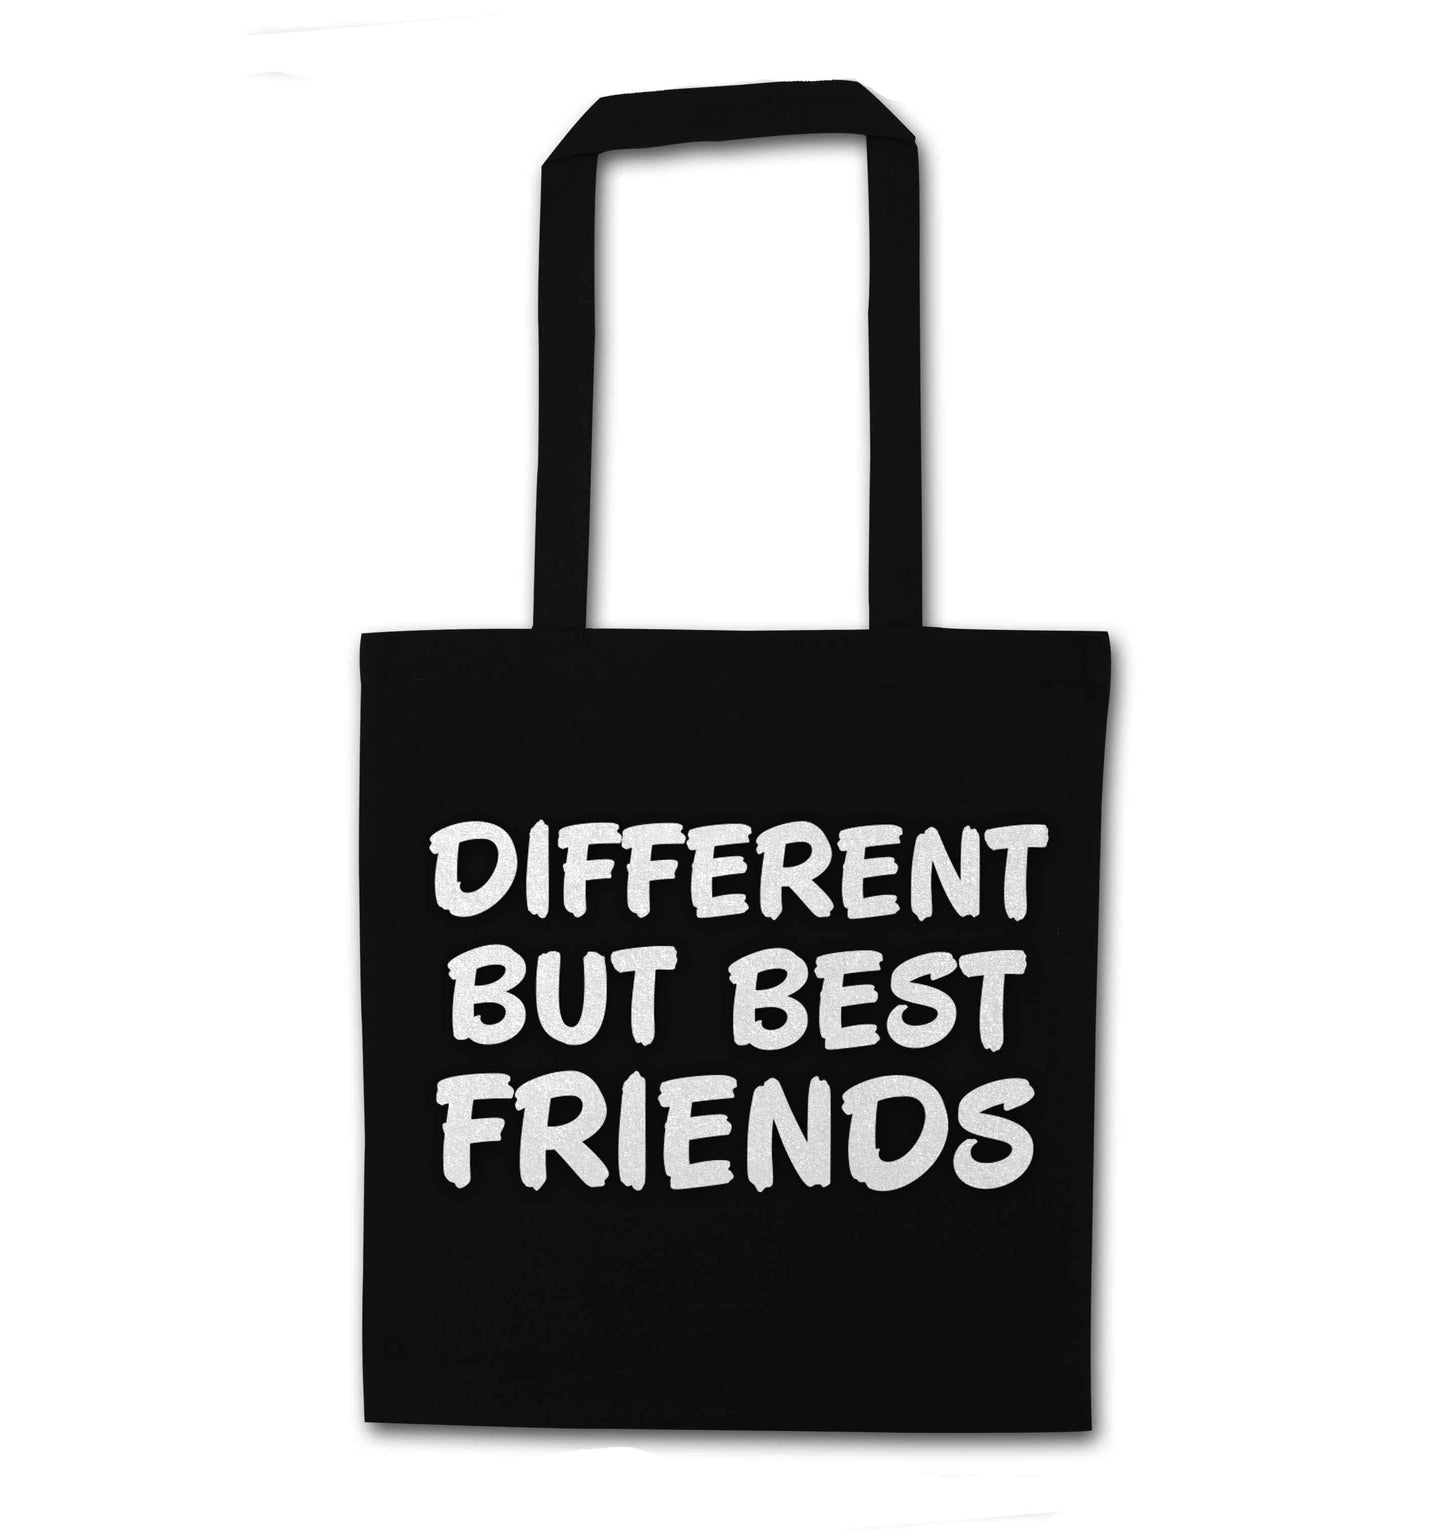 Different but best friends black tote bag